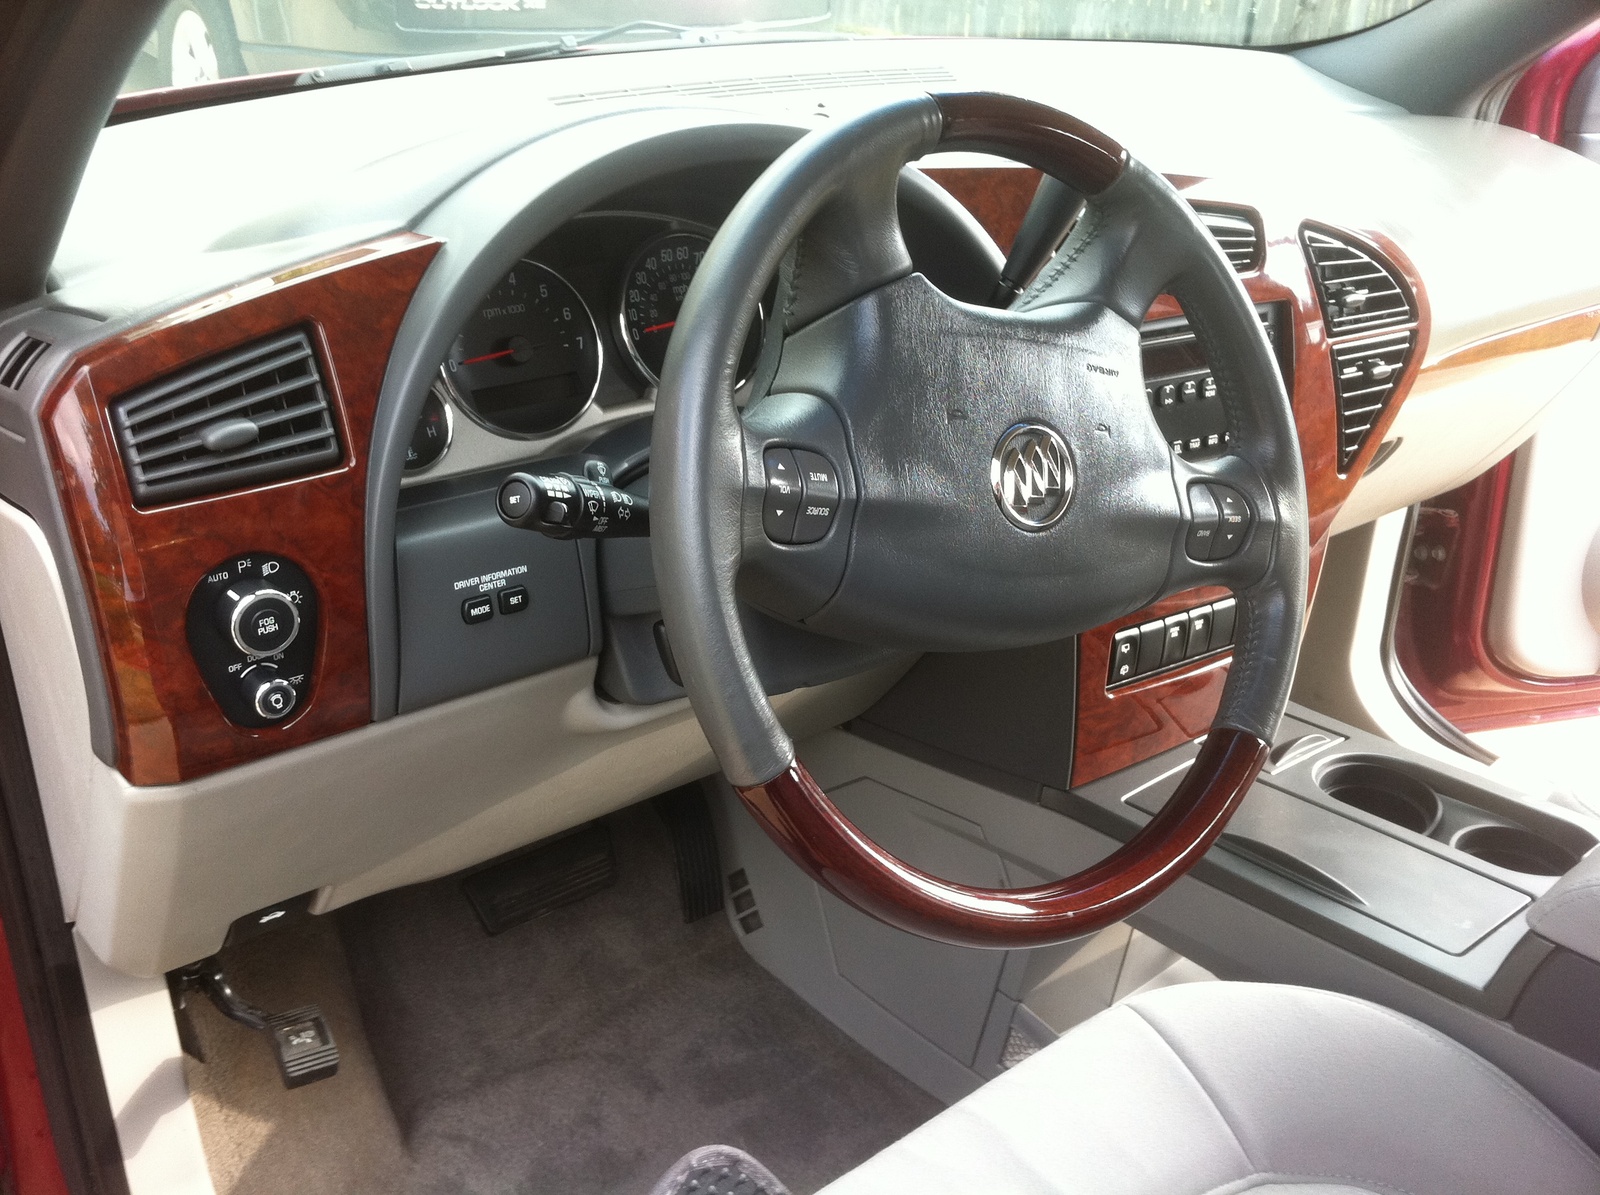 Picture of 2007 Buick Rendezvous CXL, interior.